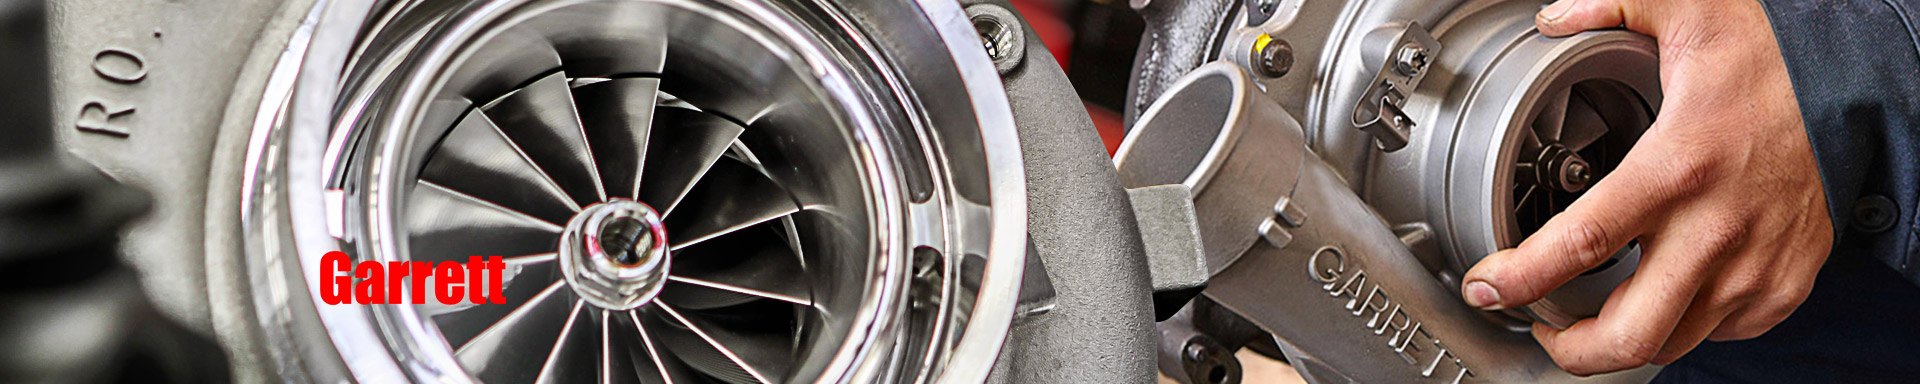 Garrett Racing Turbochargers, Superchargers & Components